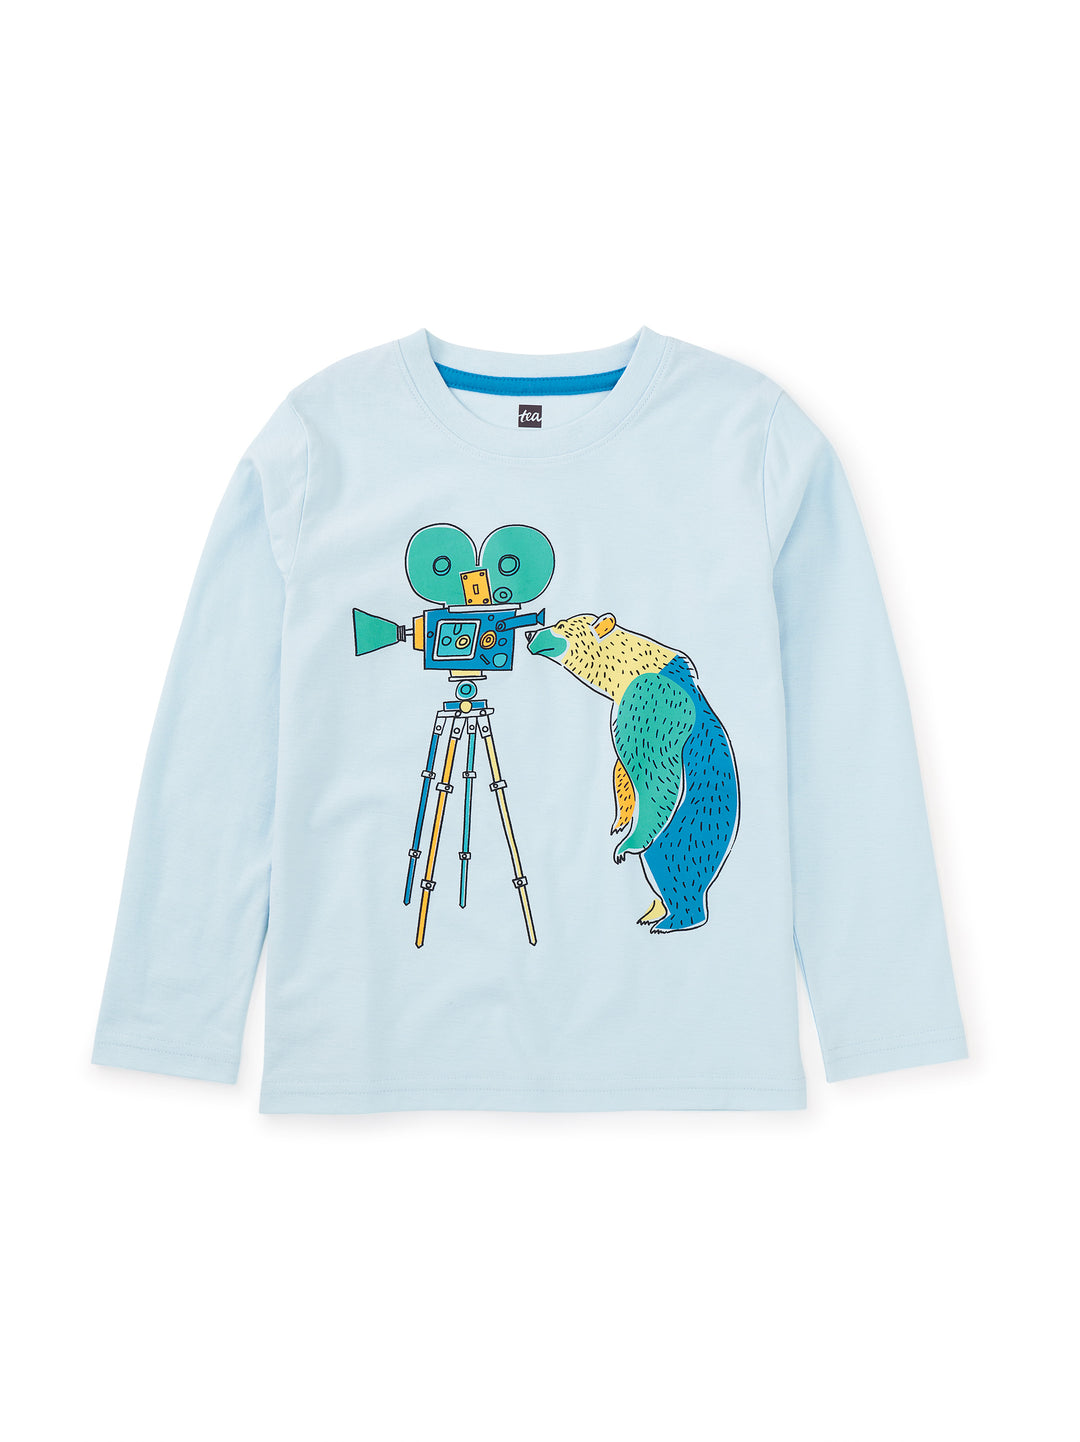 Tea Collection Camera Bear Graphic Tee, Blue Glow |Mockingbird Baby & Kids